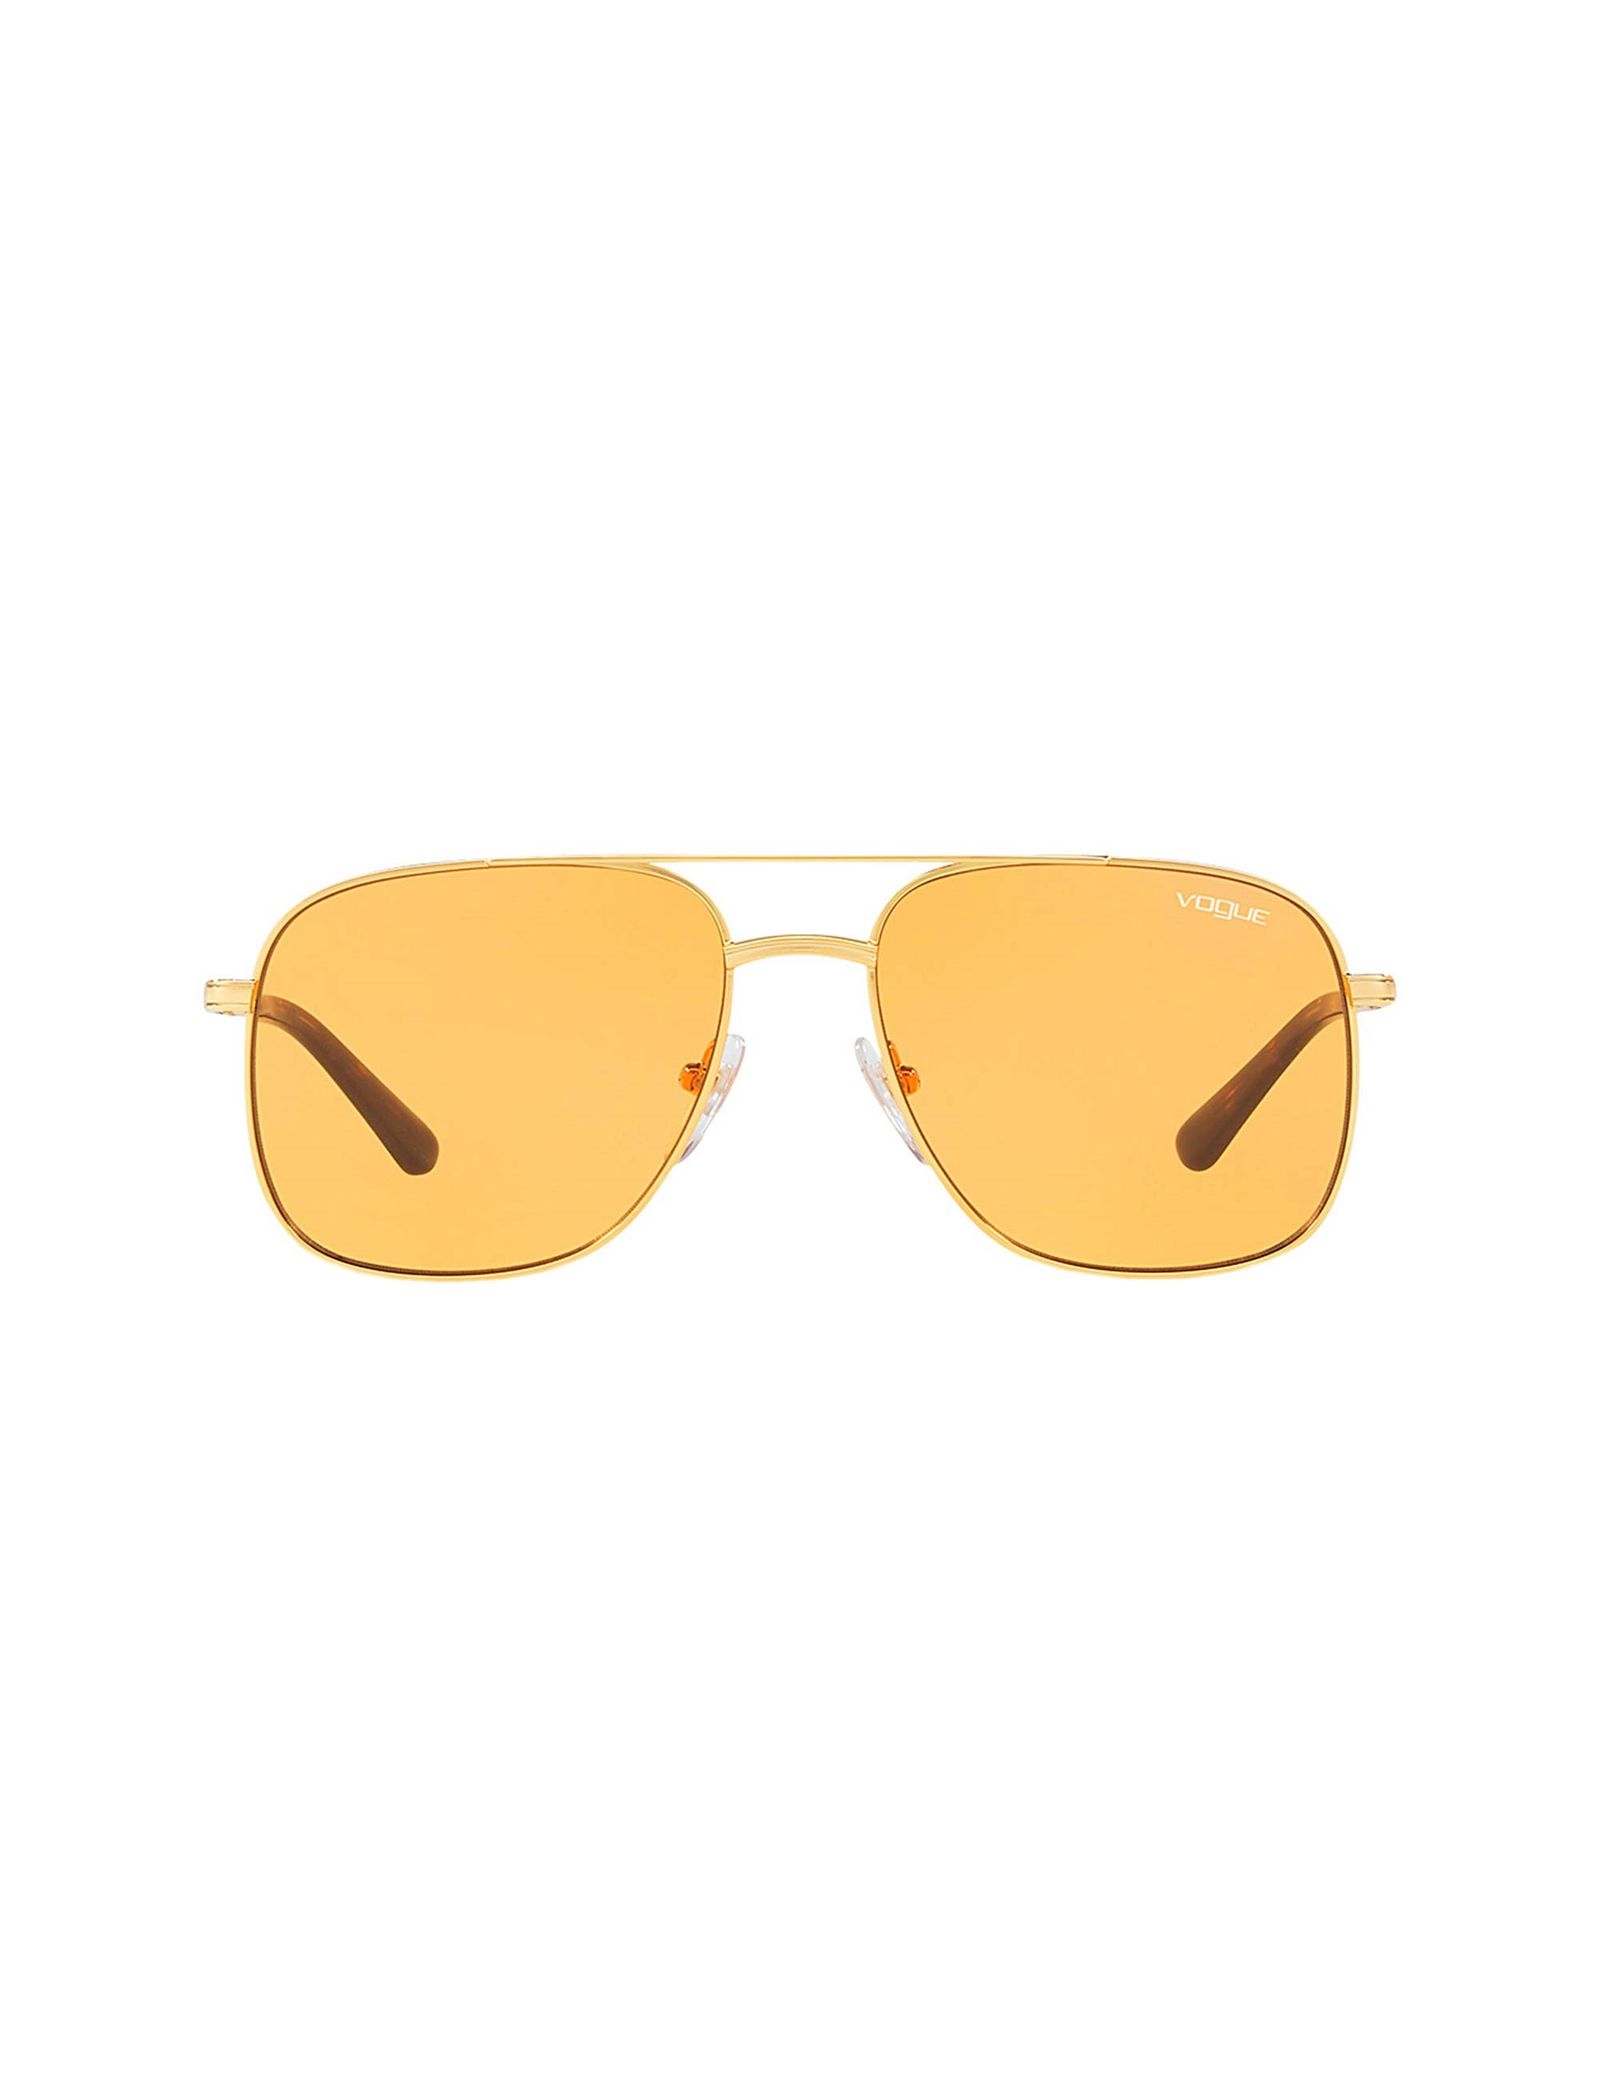 عینک آفتابی خلبانی زنانه - ووگ - طلايي - 1